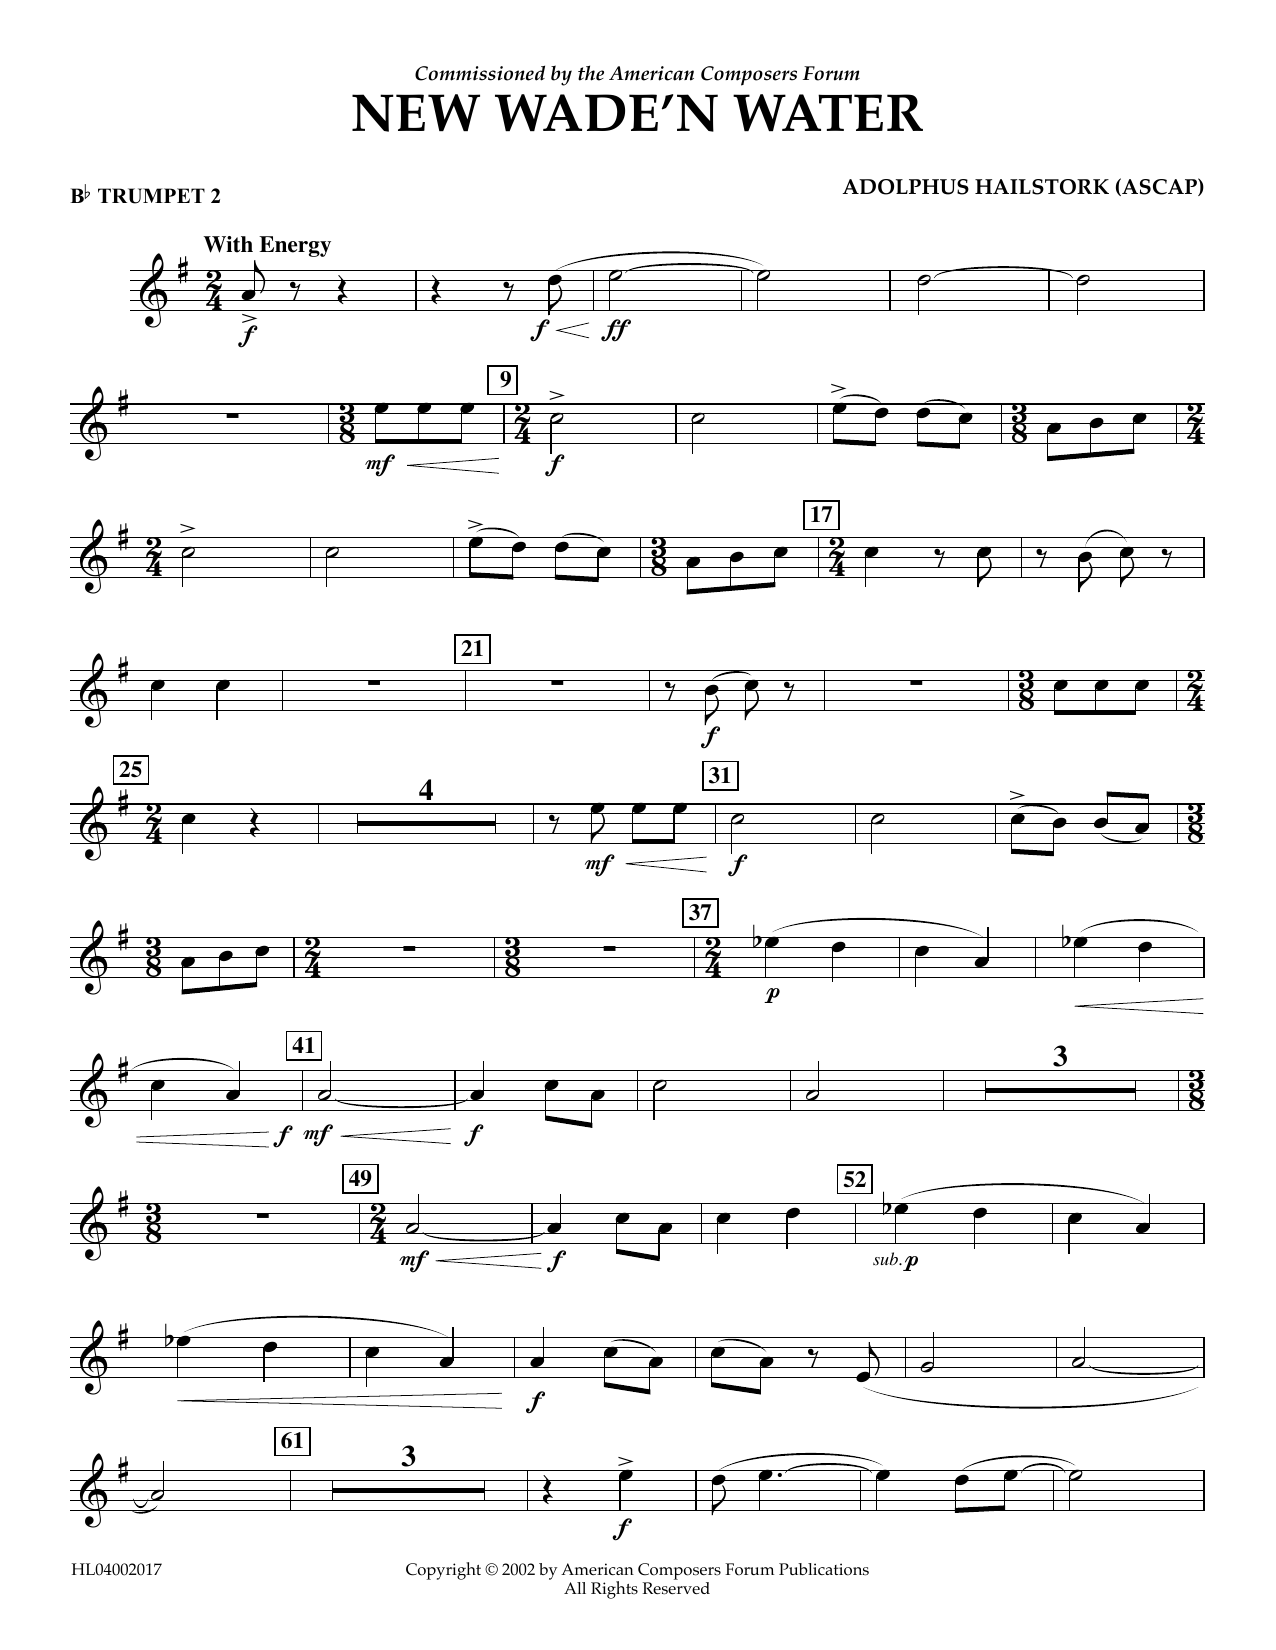 Download Adolphus Hailstork New Wade 'n Water - Bb Trumpet 2 Sheet Music